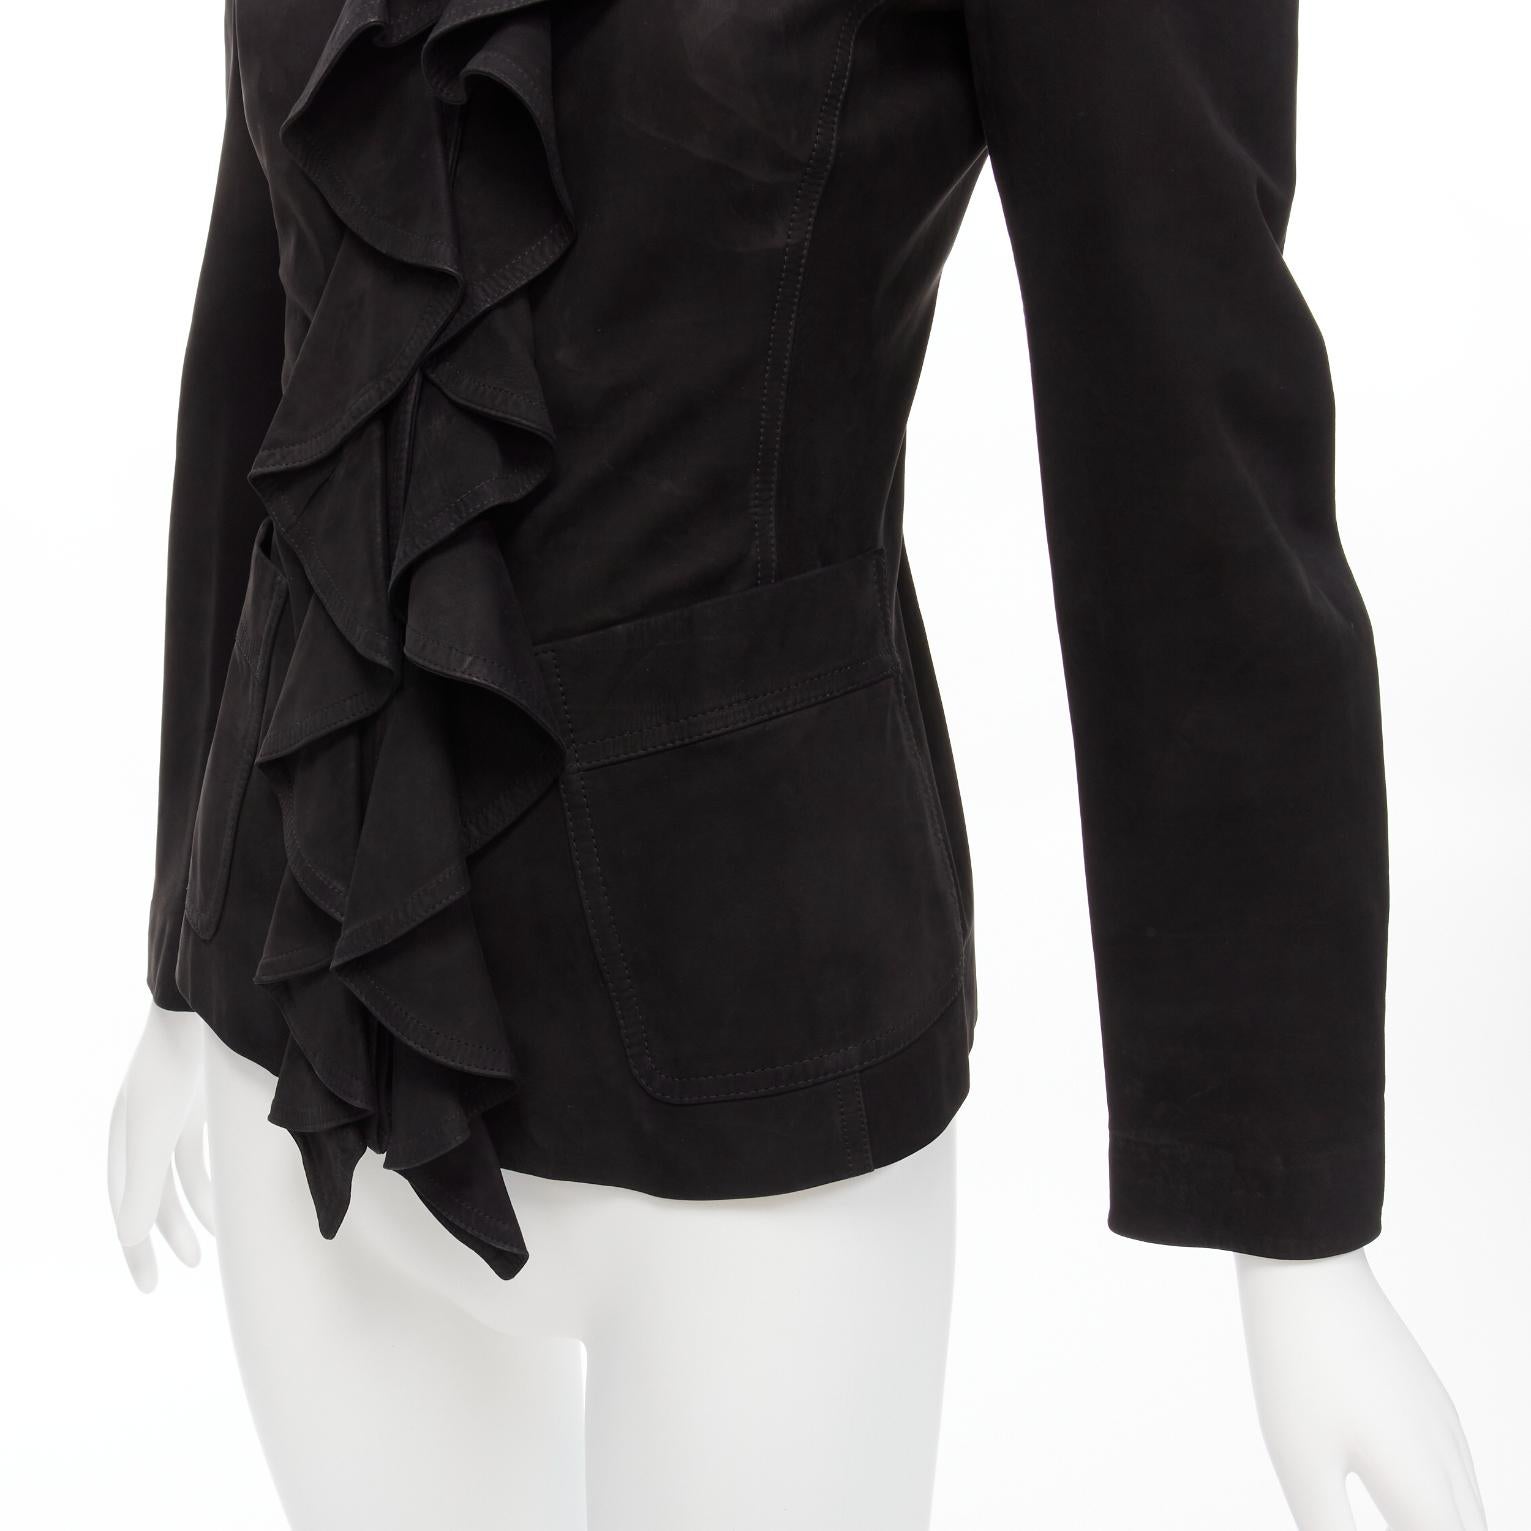 YVES SAINT LAURENT Vintage Stefano Pilati leather ruffle fitted jacket FR36 S 5